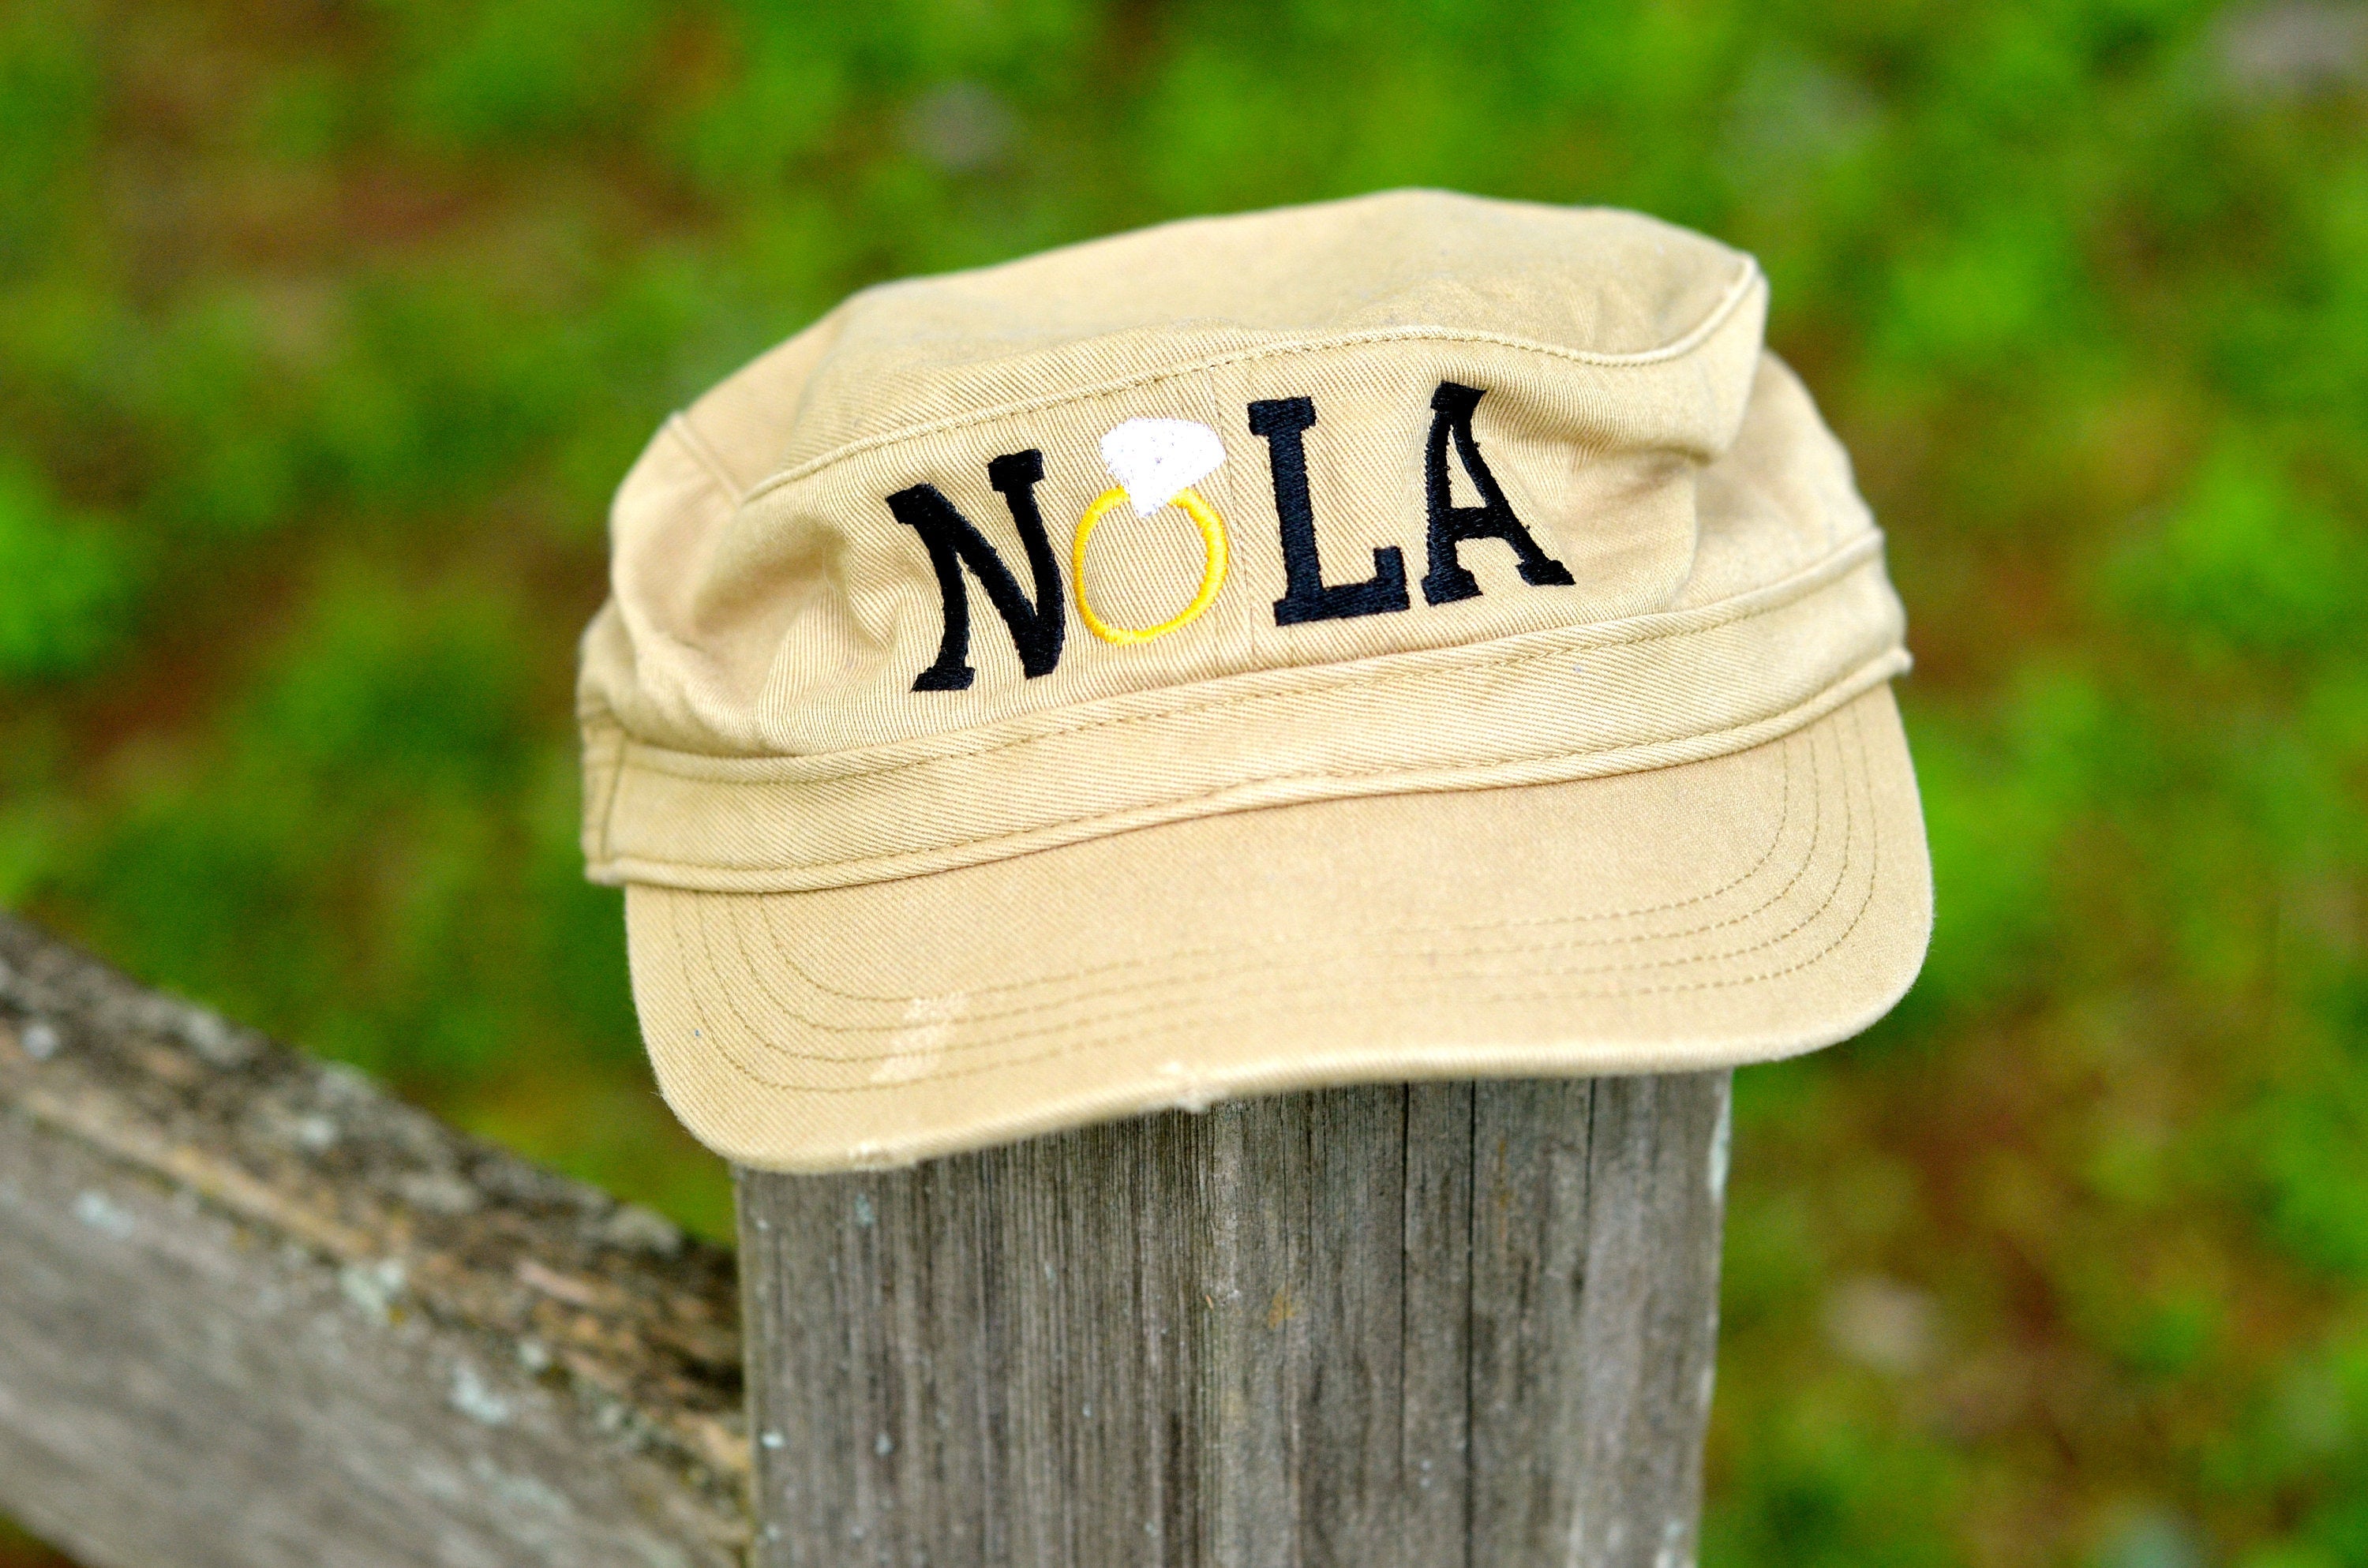 New Orleans Bachelorette Newsboy Hat, Nola Squad Nola Bride, NOLA // Bachelorette Party Bride Newsboy Hat